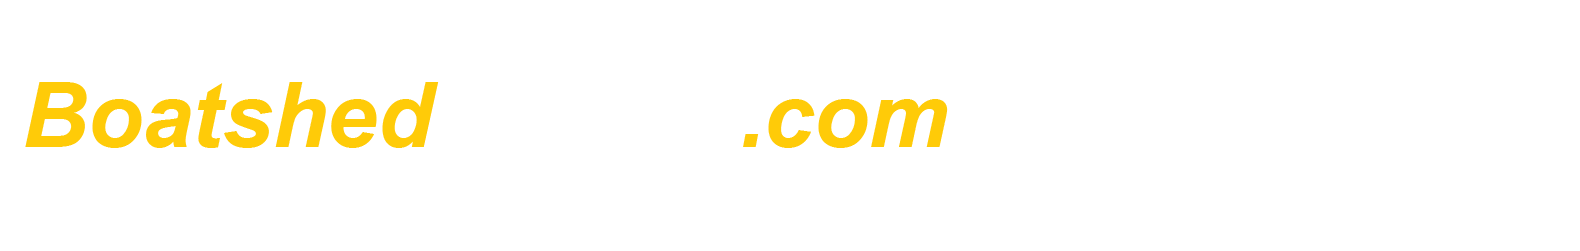 BoatshedEverett.com - International Yacht Brokers